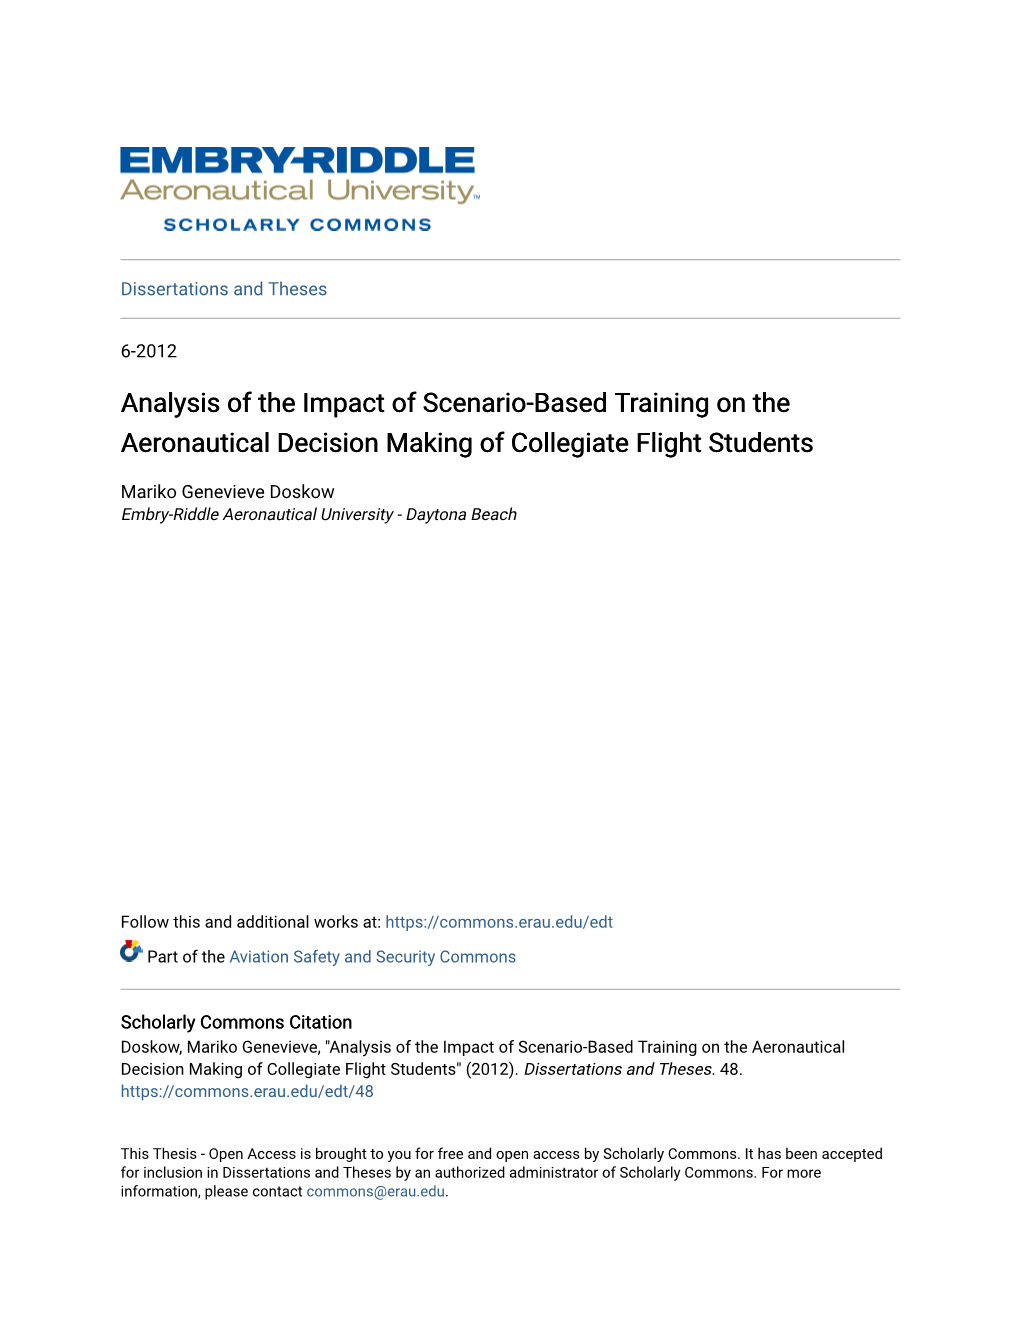 Analysis of the Impact of Scenario-Based Training on the Aeronautical Decision Making of Collegiate Flight Students